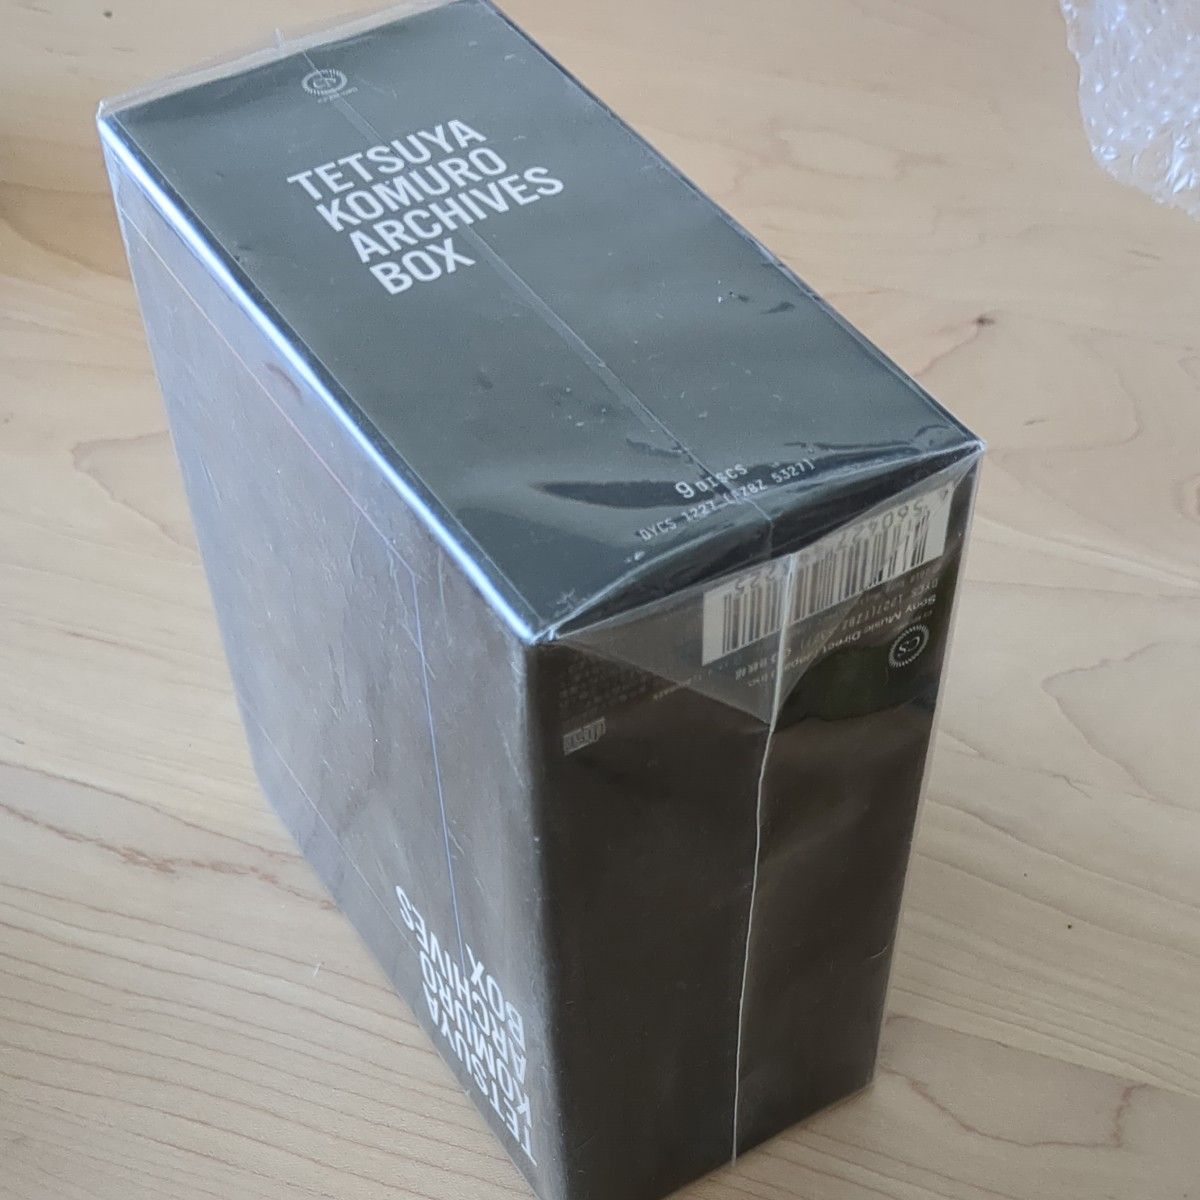 小室哲哉作品集 BOXセット CD9枚組 TETSUYA KOMURO ARCHIVES BOX DYCS-1227 新品未開封品